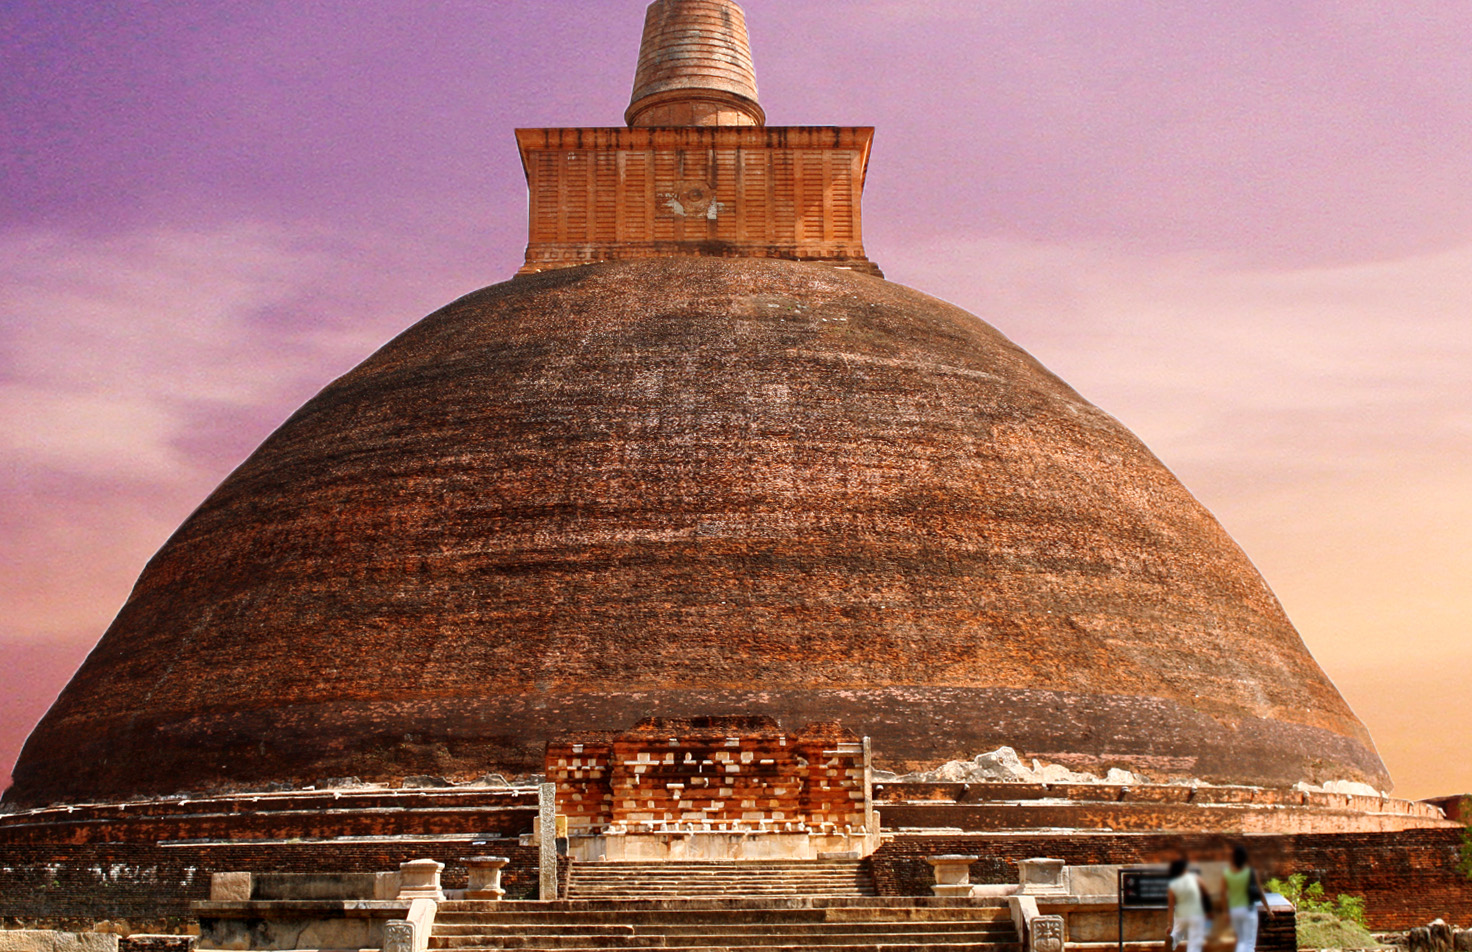 Jetavanaramaya is one of the world's best temples. 